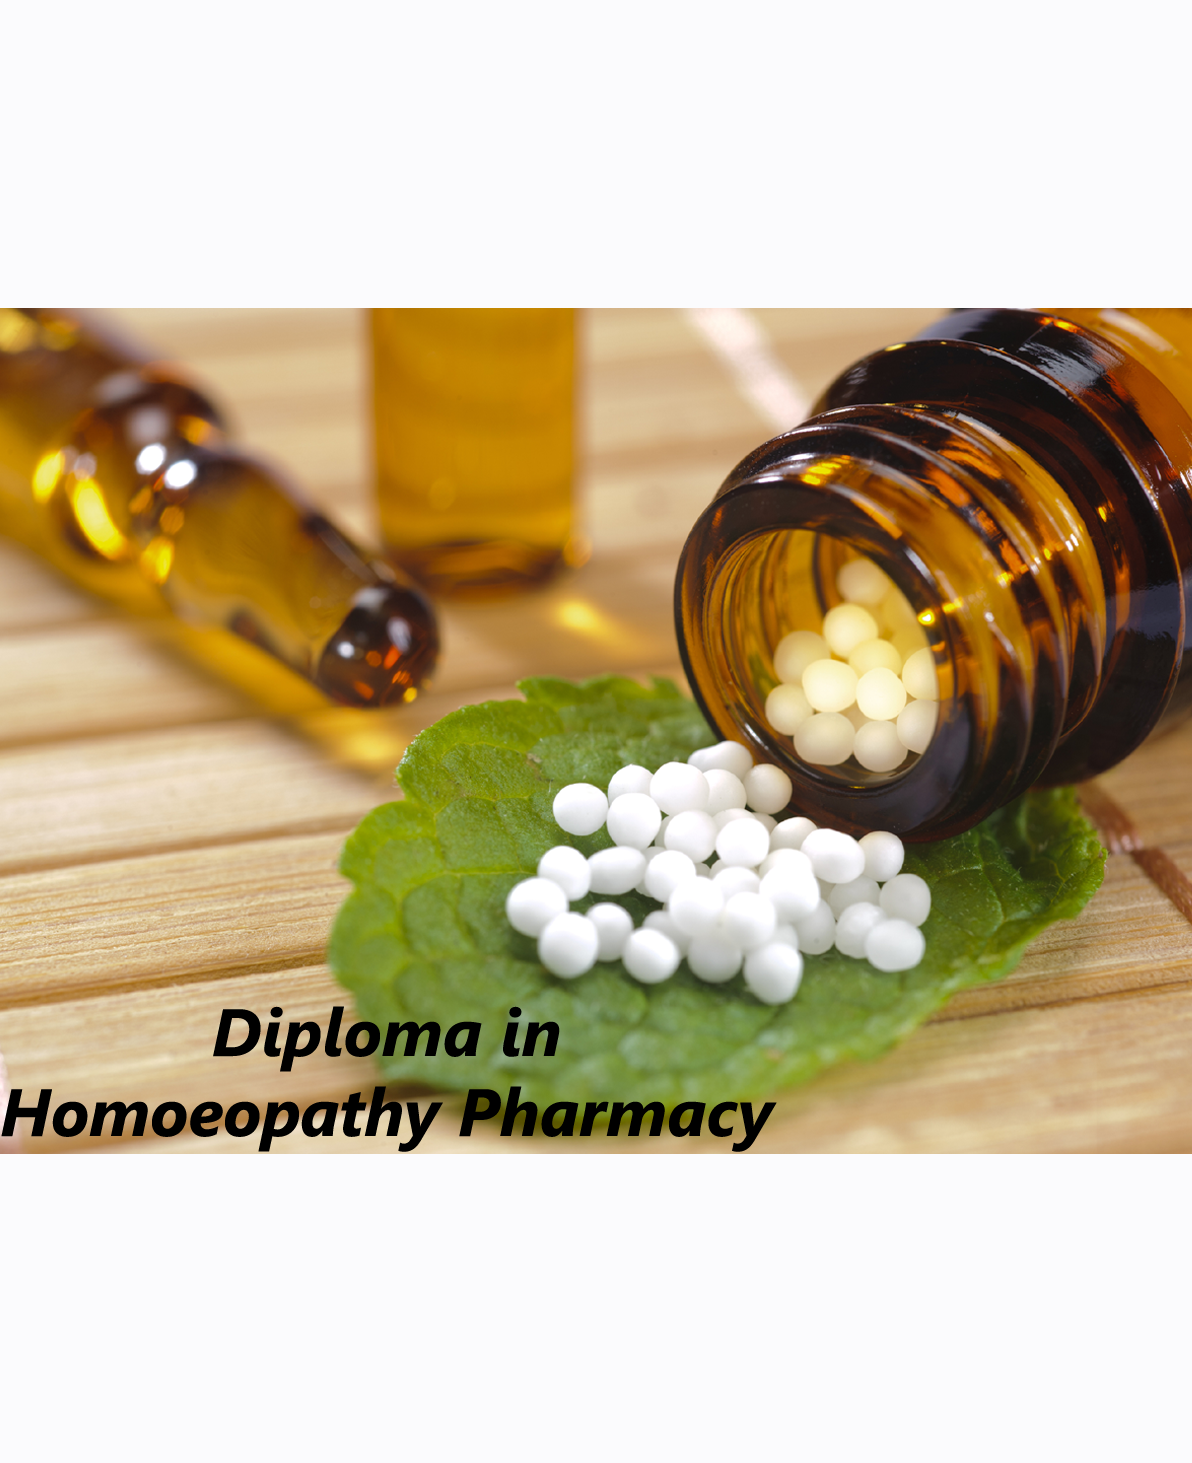 Diploma in Homeopathy Pharmacy